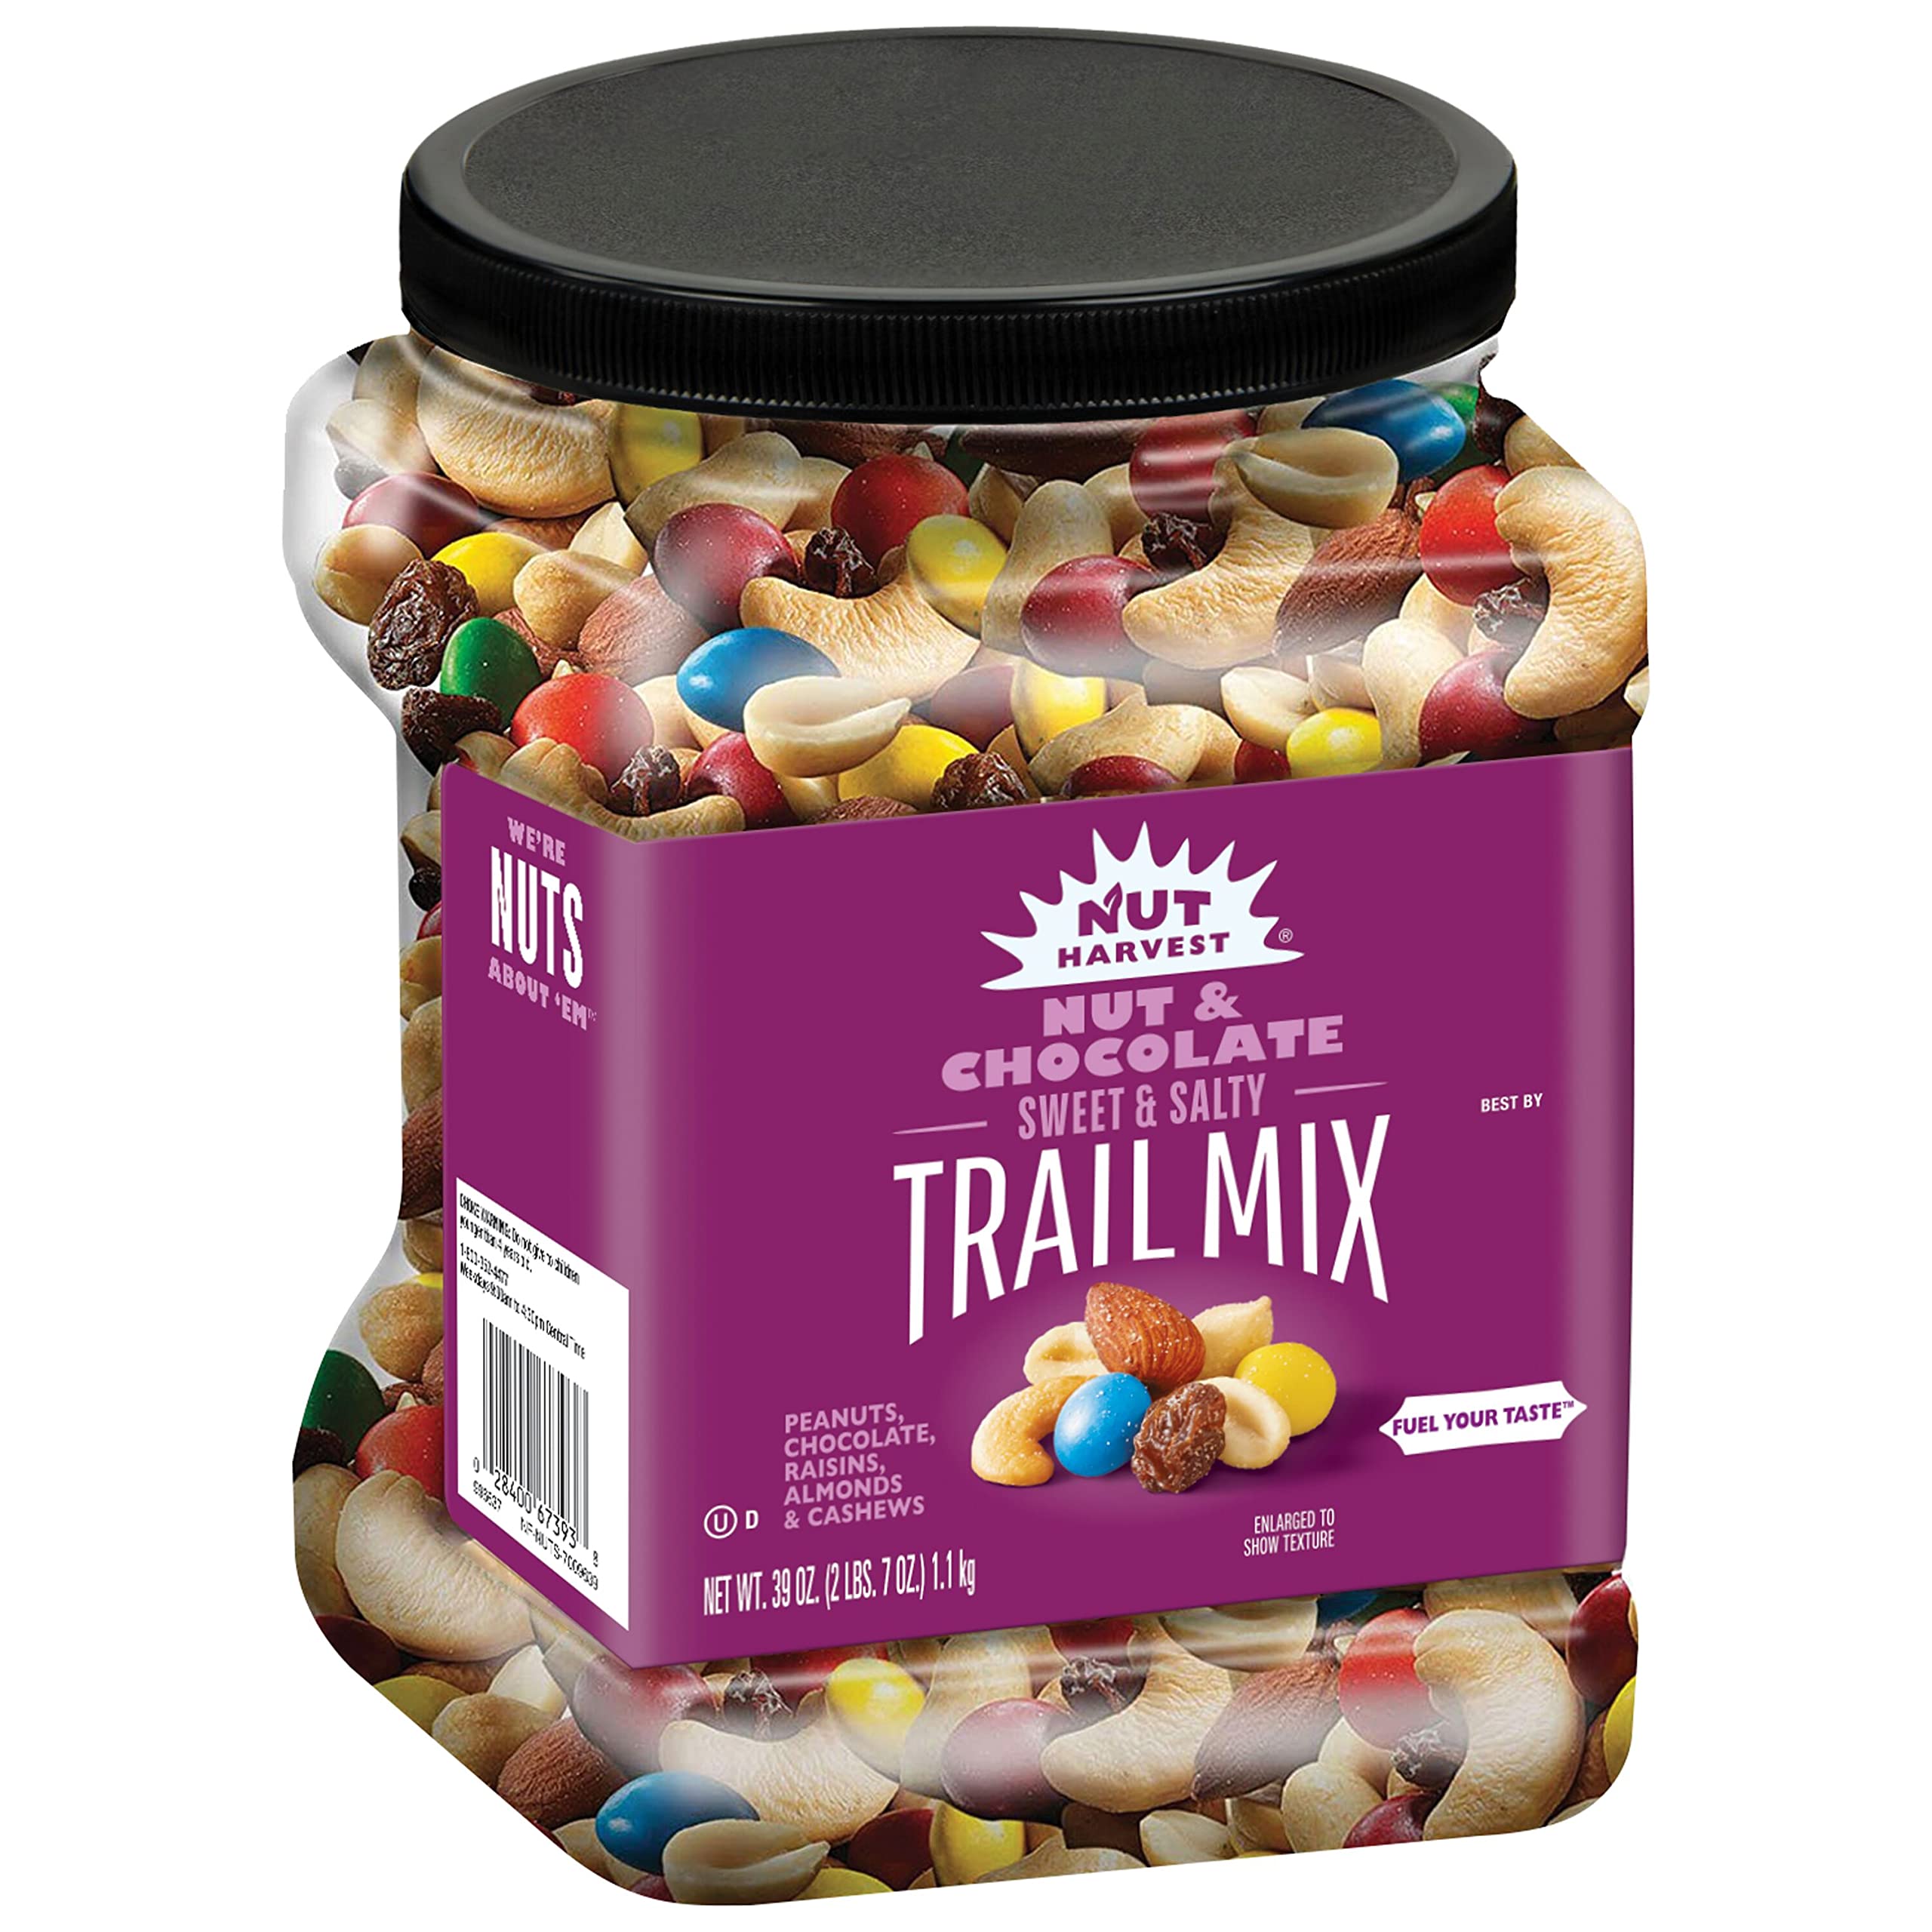 Nut Harvest Nut & Chocolate Mix, 39 Ounce Jar - $13.63 at Amazon